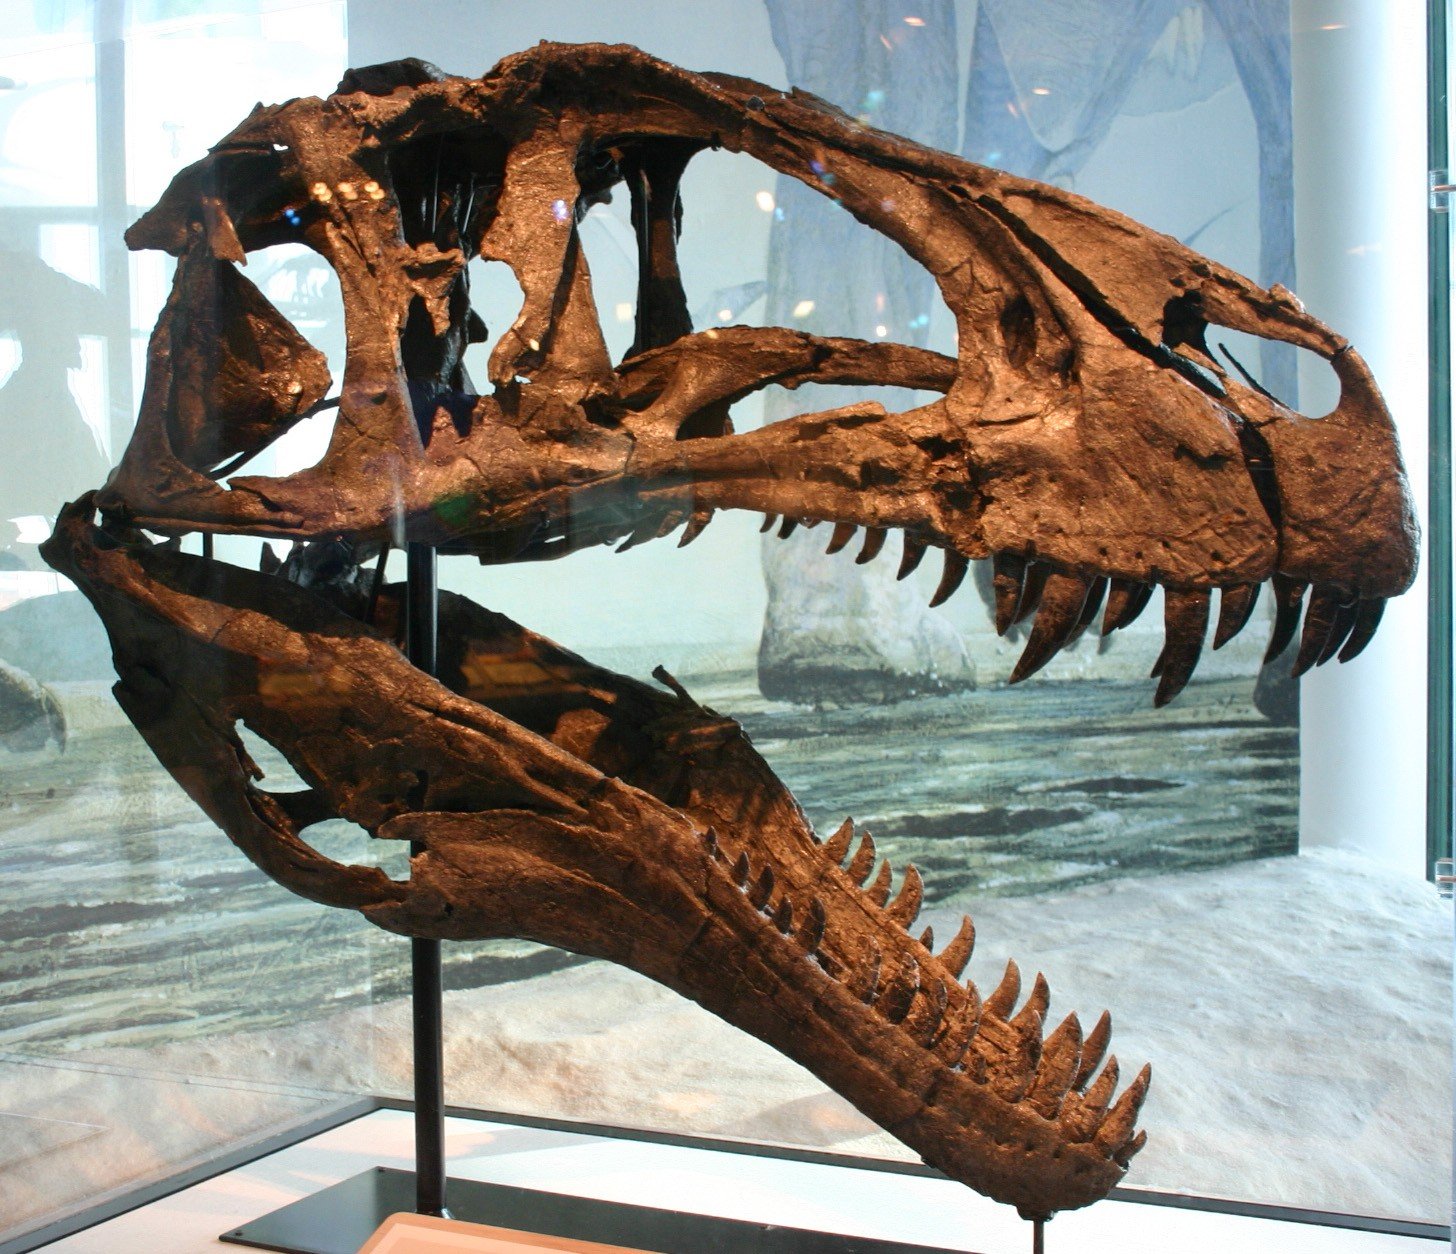 Акрокантозавр, фото акрокантозавр